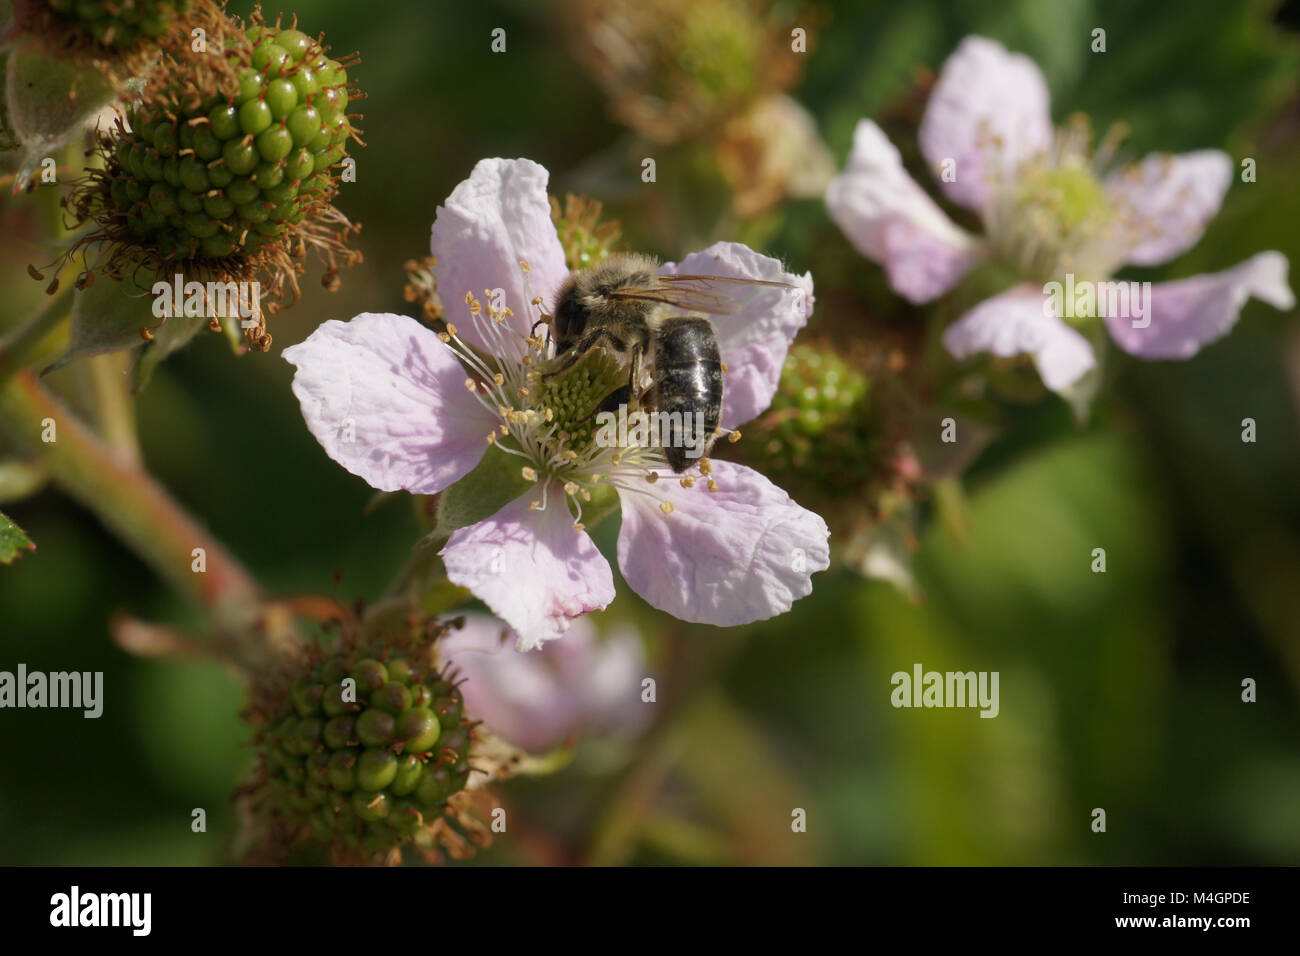 Rubus fruticosus, Blackberry, blossom with bee Stock Photo